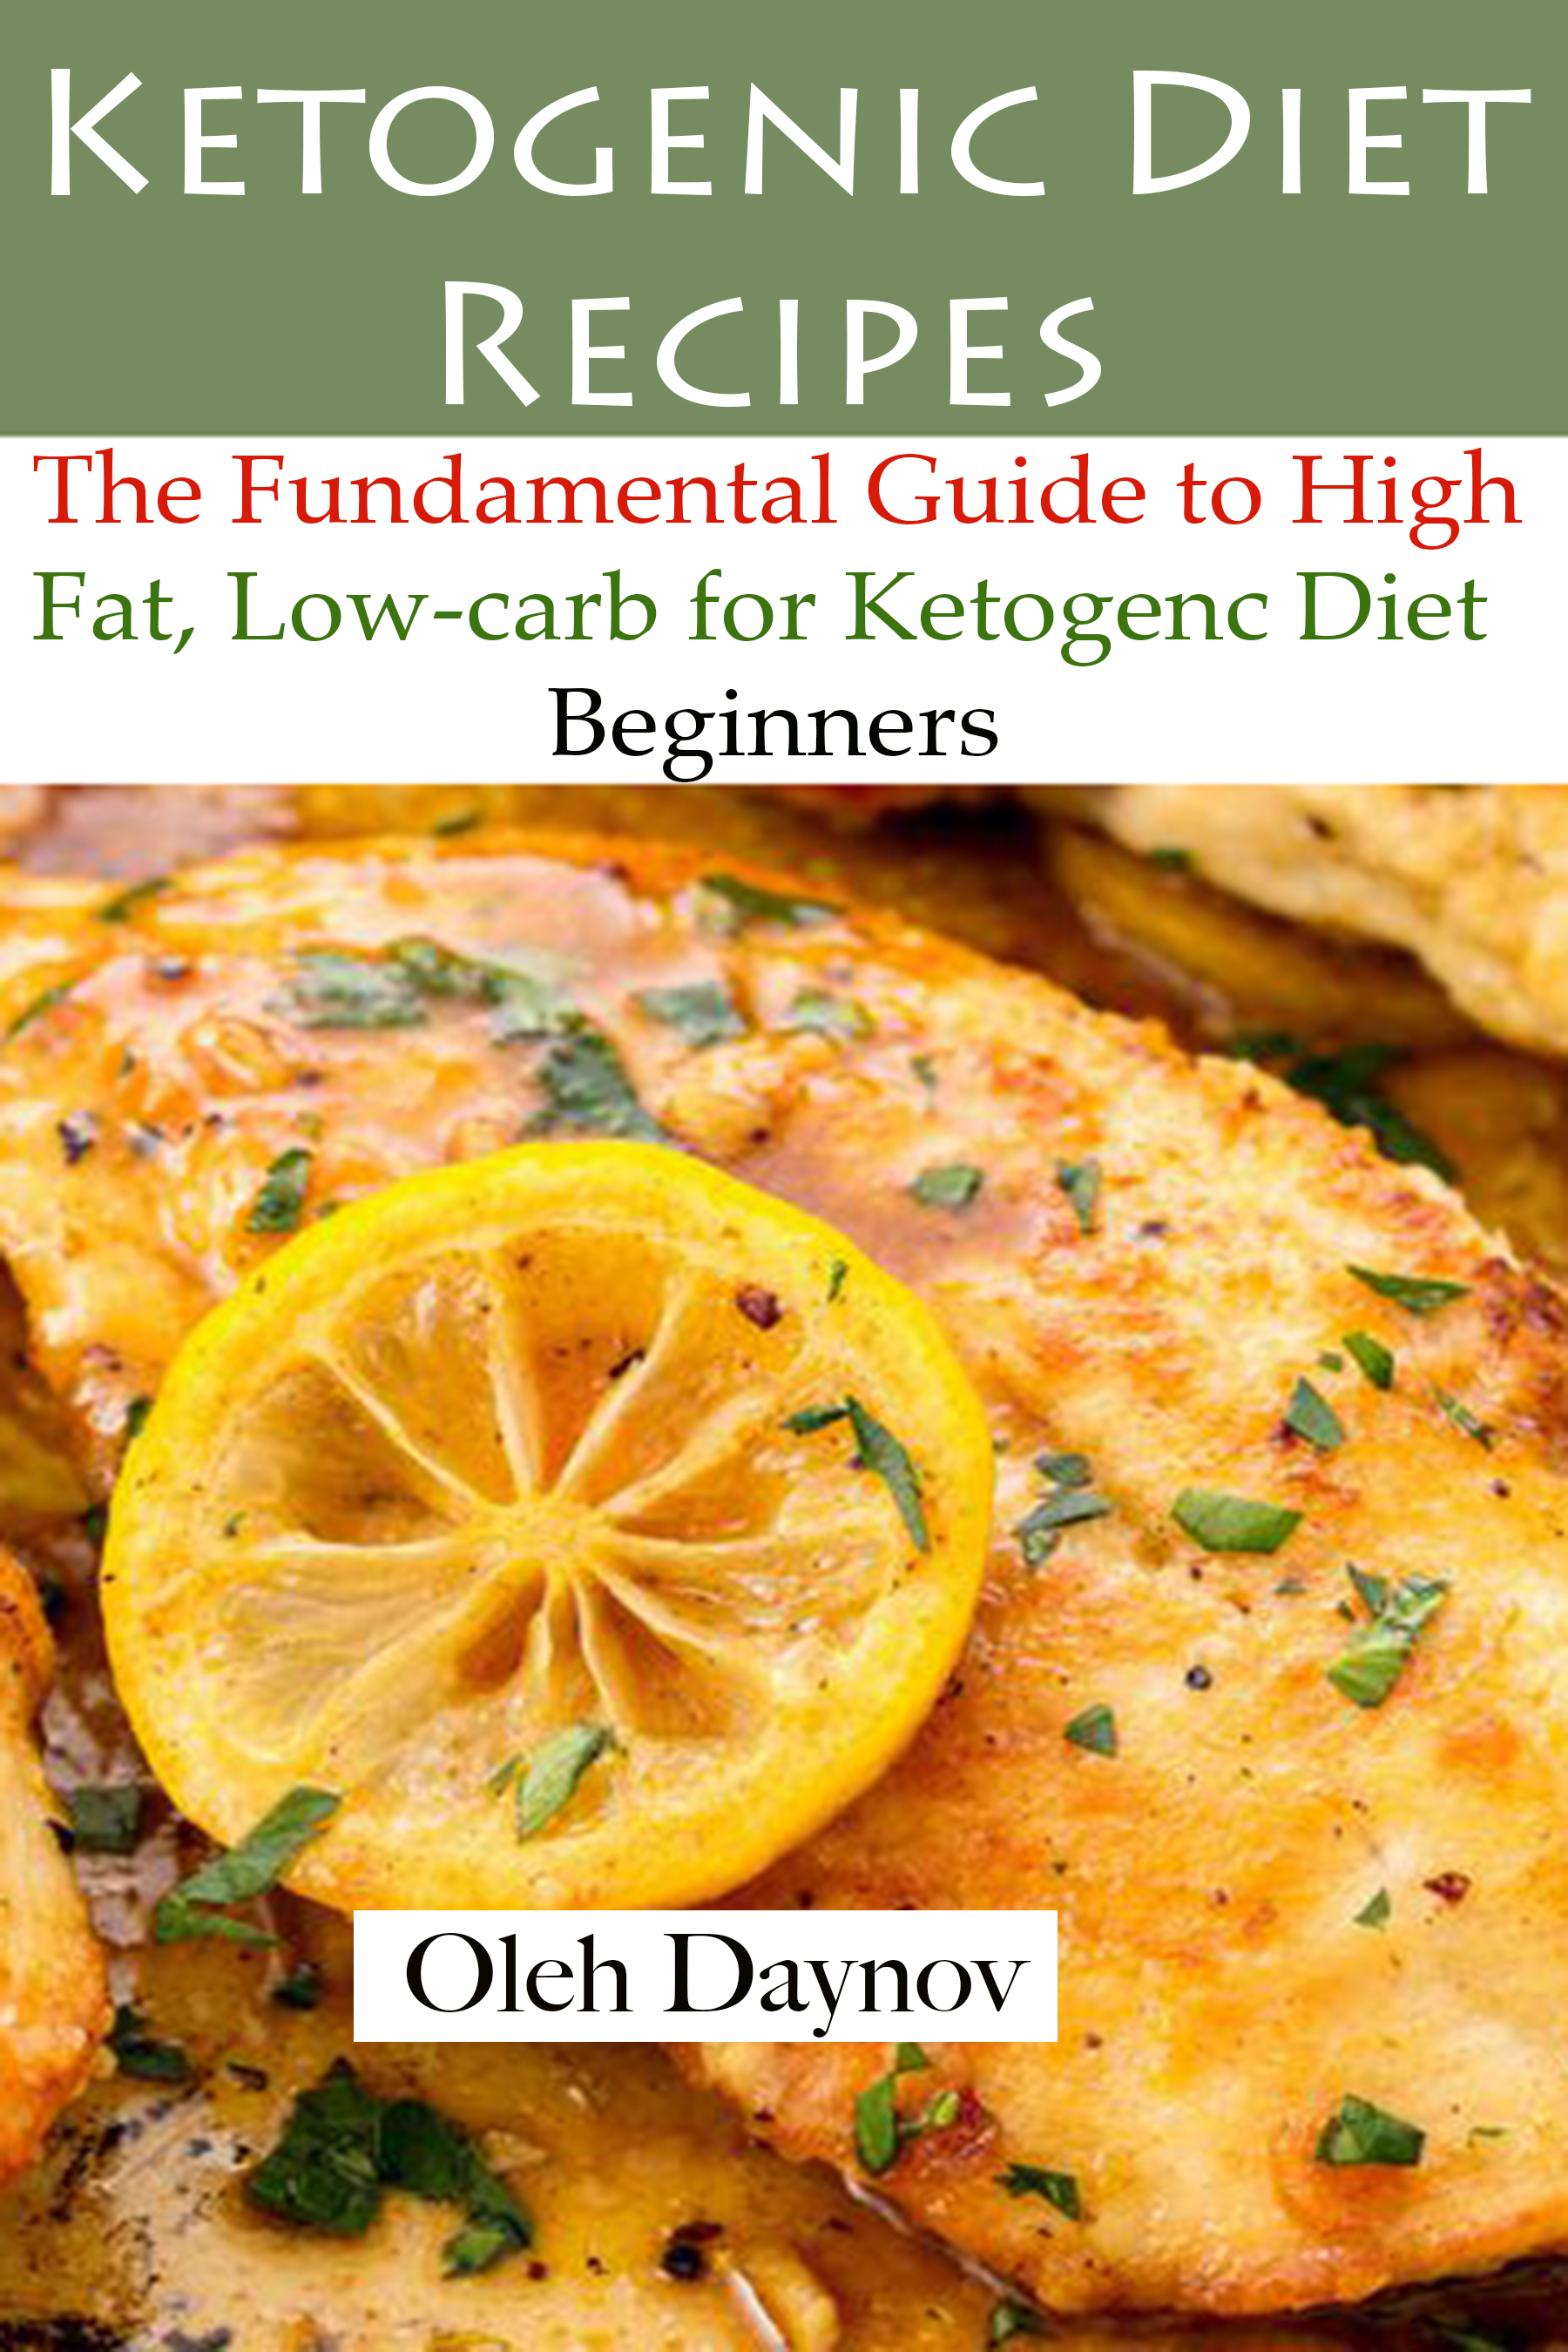 FREE: The Easy Ketogenic Diet for Beginner: Your Guide to Basik o The Ketogenic Diet by Oleg Daynov